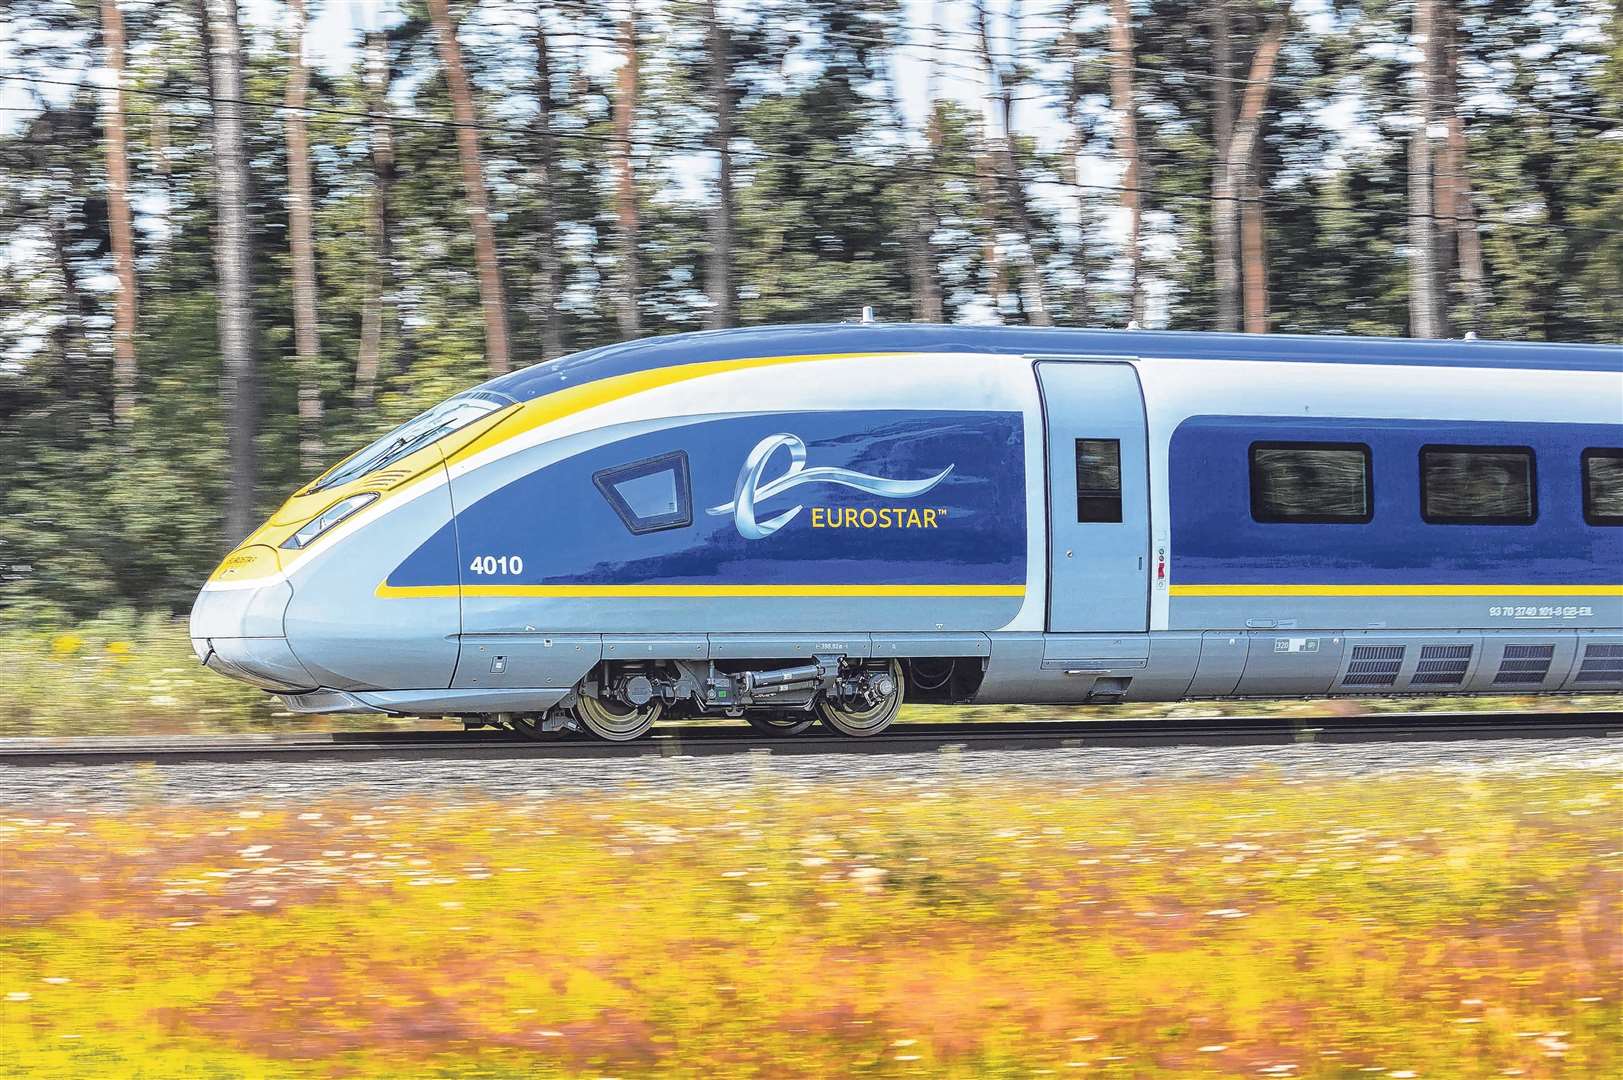 Eurostar e320 train on the high-speed track